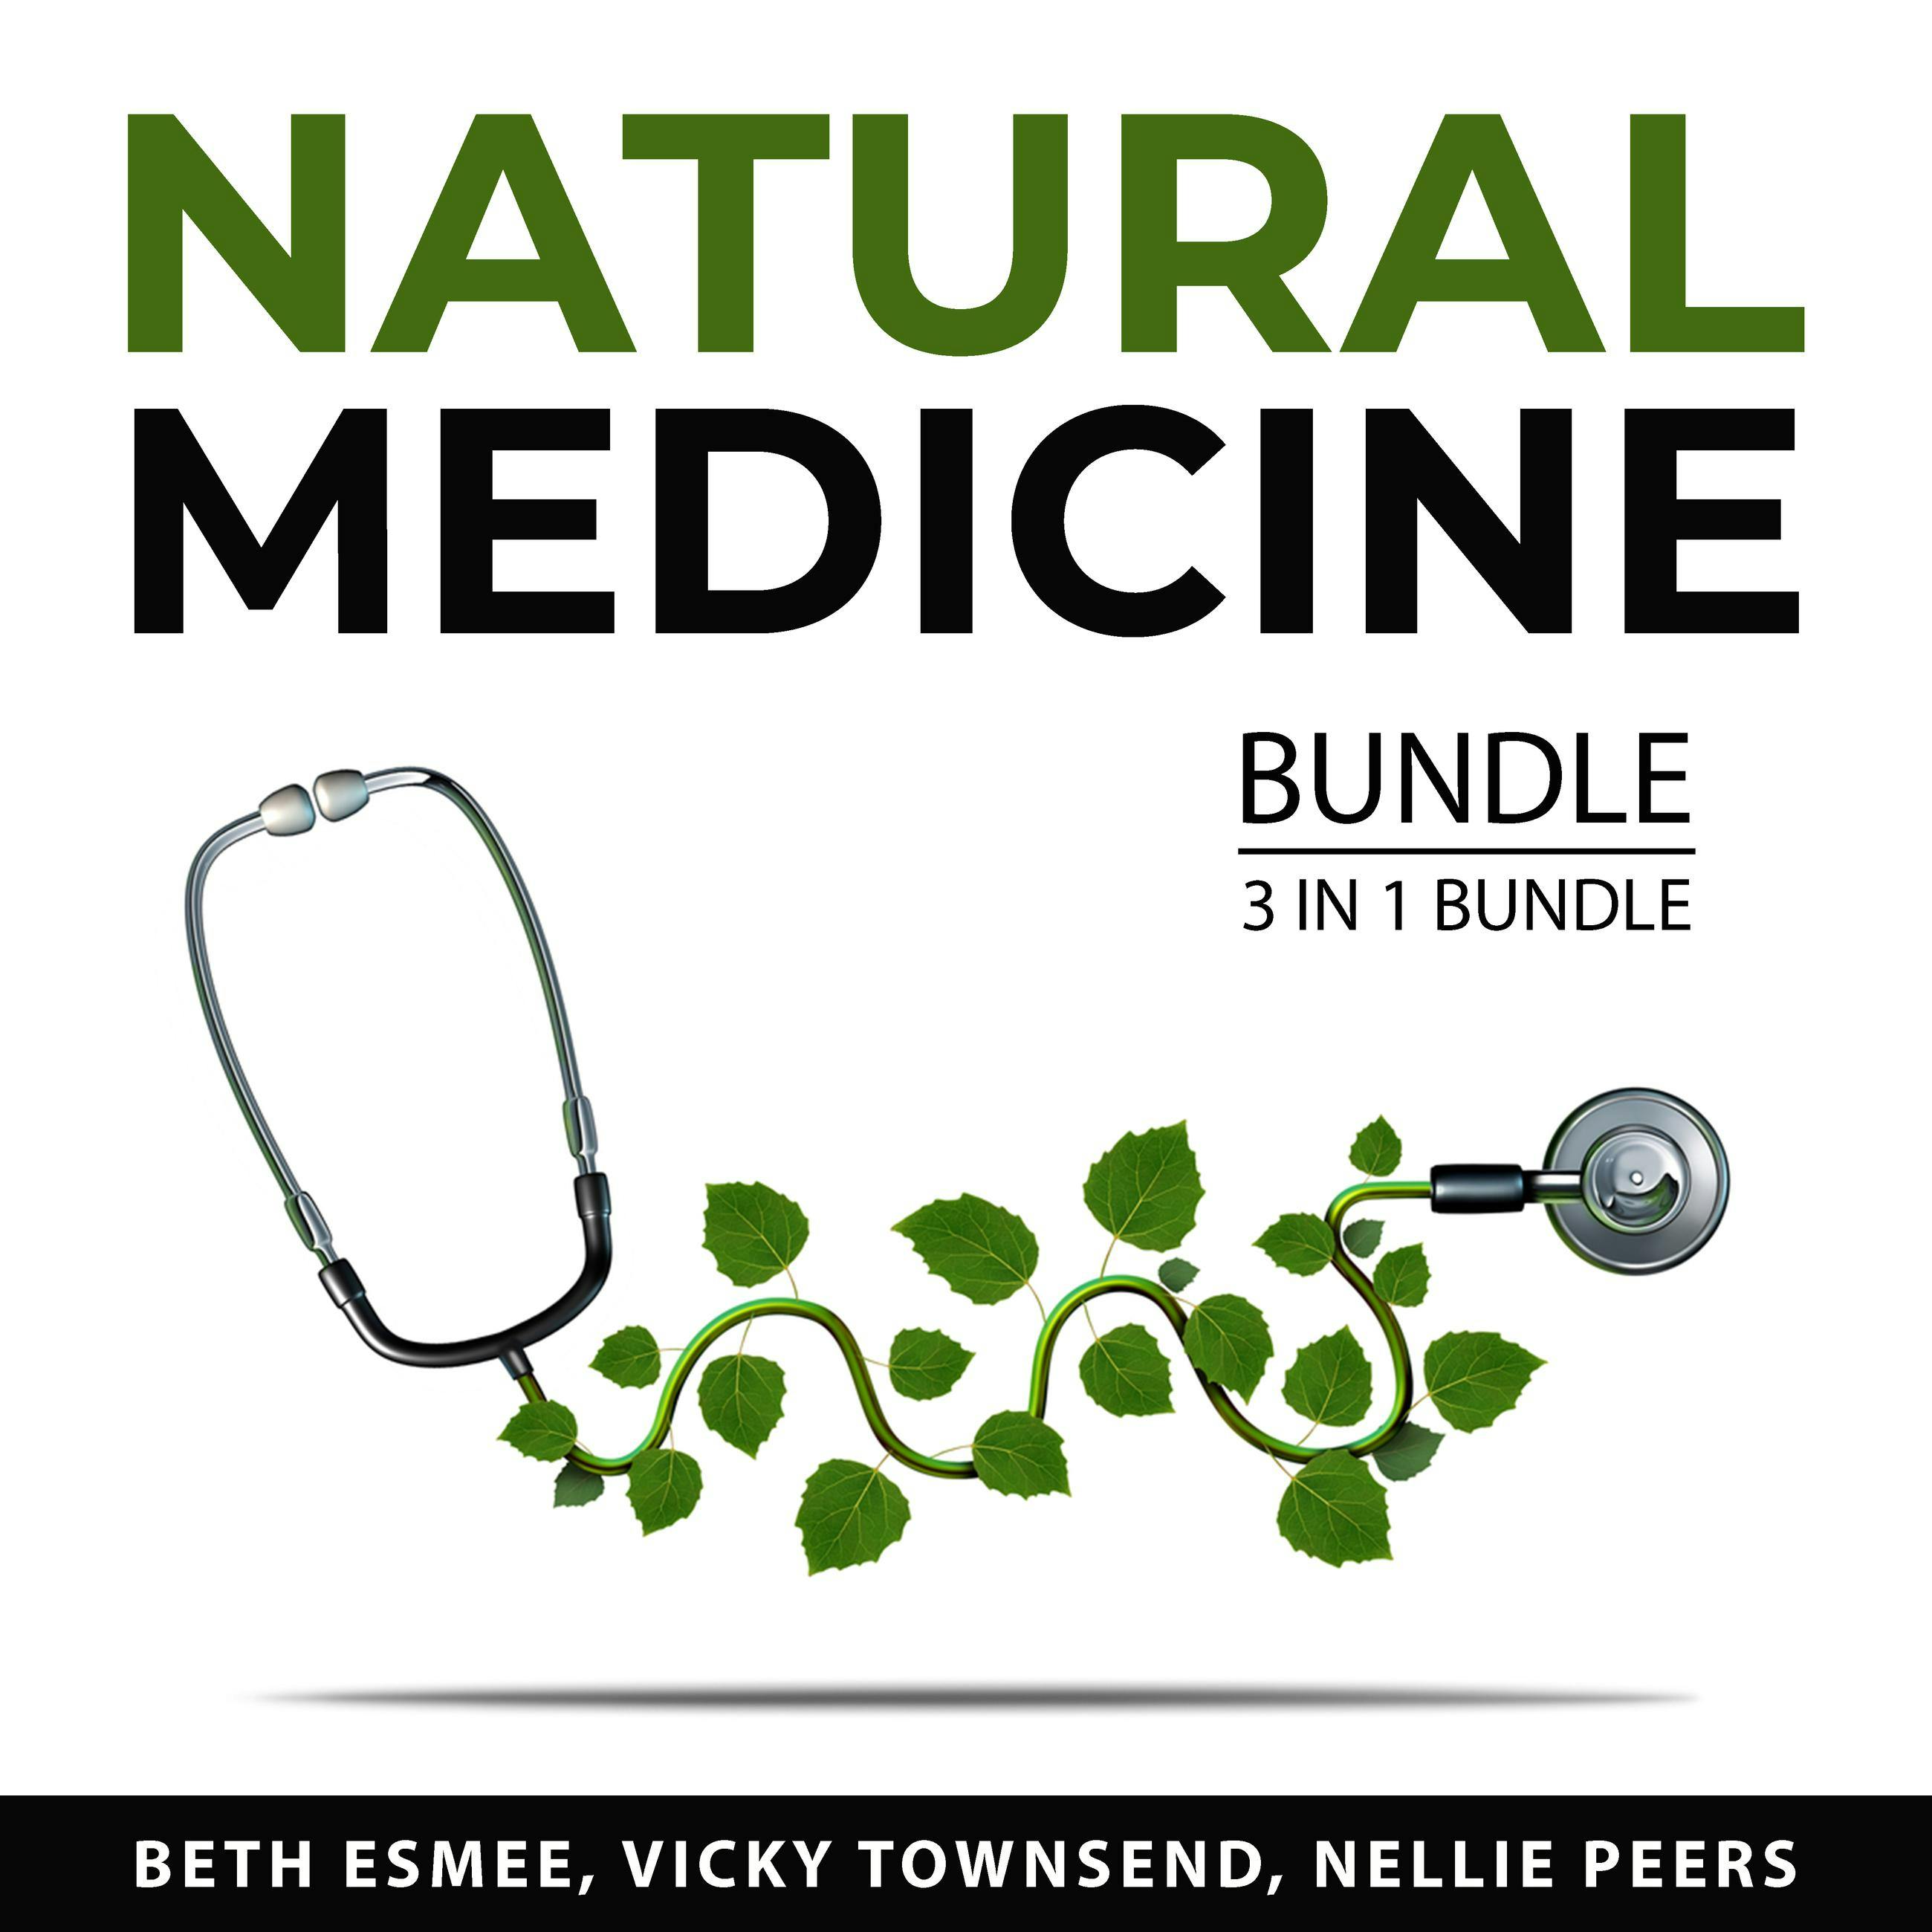 Natural Medicine Bundle, 3 in 1 Bundle: Healing Through Medicinal Herbs, Medicinal Plants Handbook, The Alternative Choice - Vicky Townsend, Beth Esmee, Nellie Peers